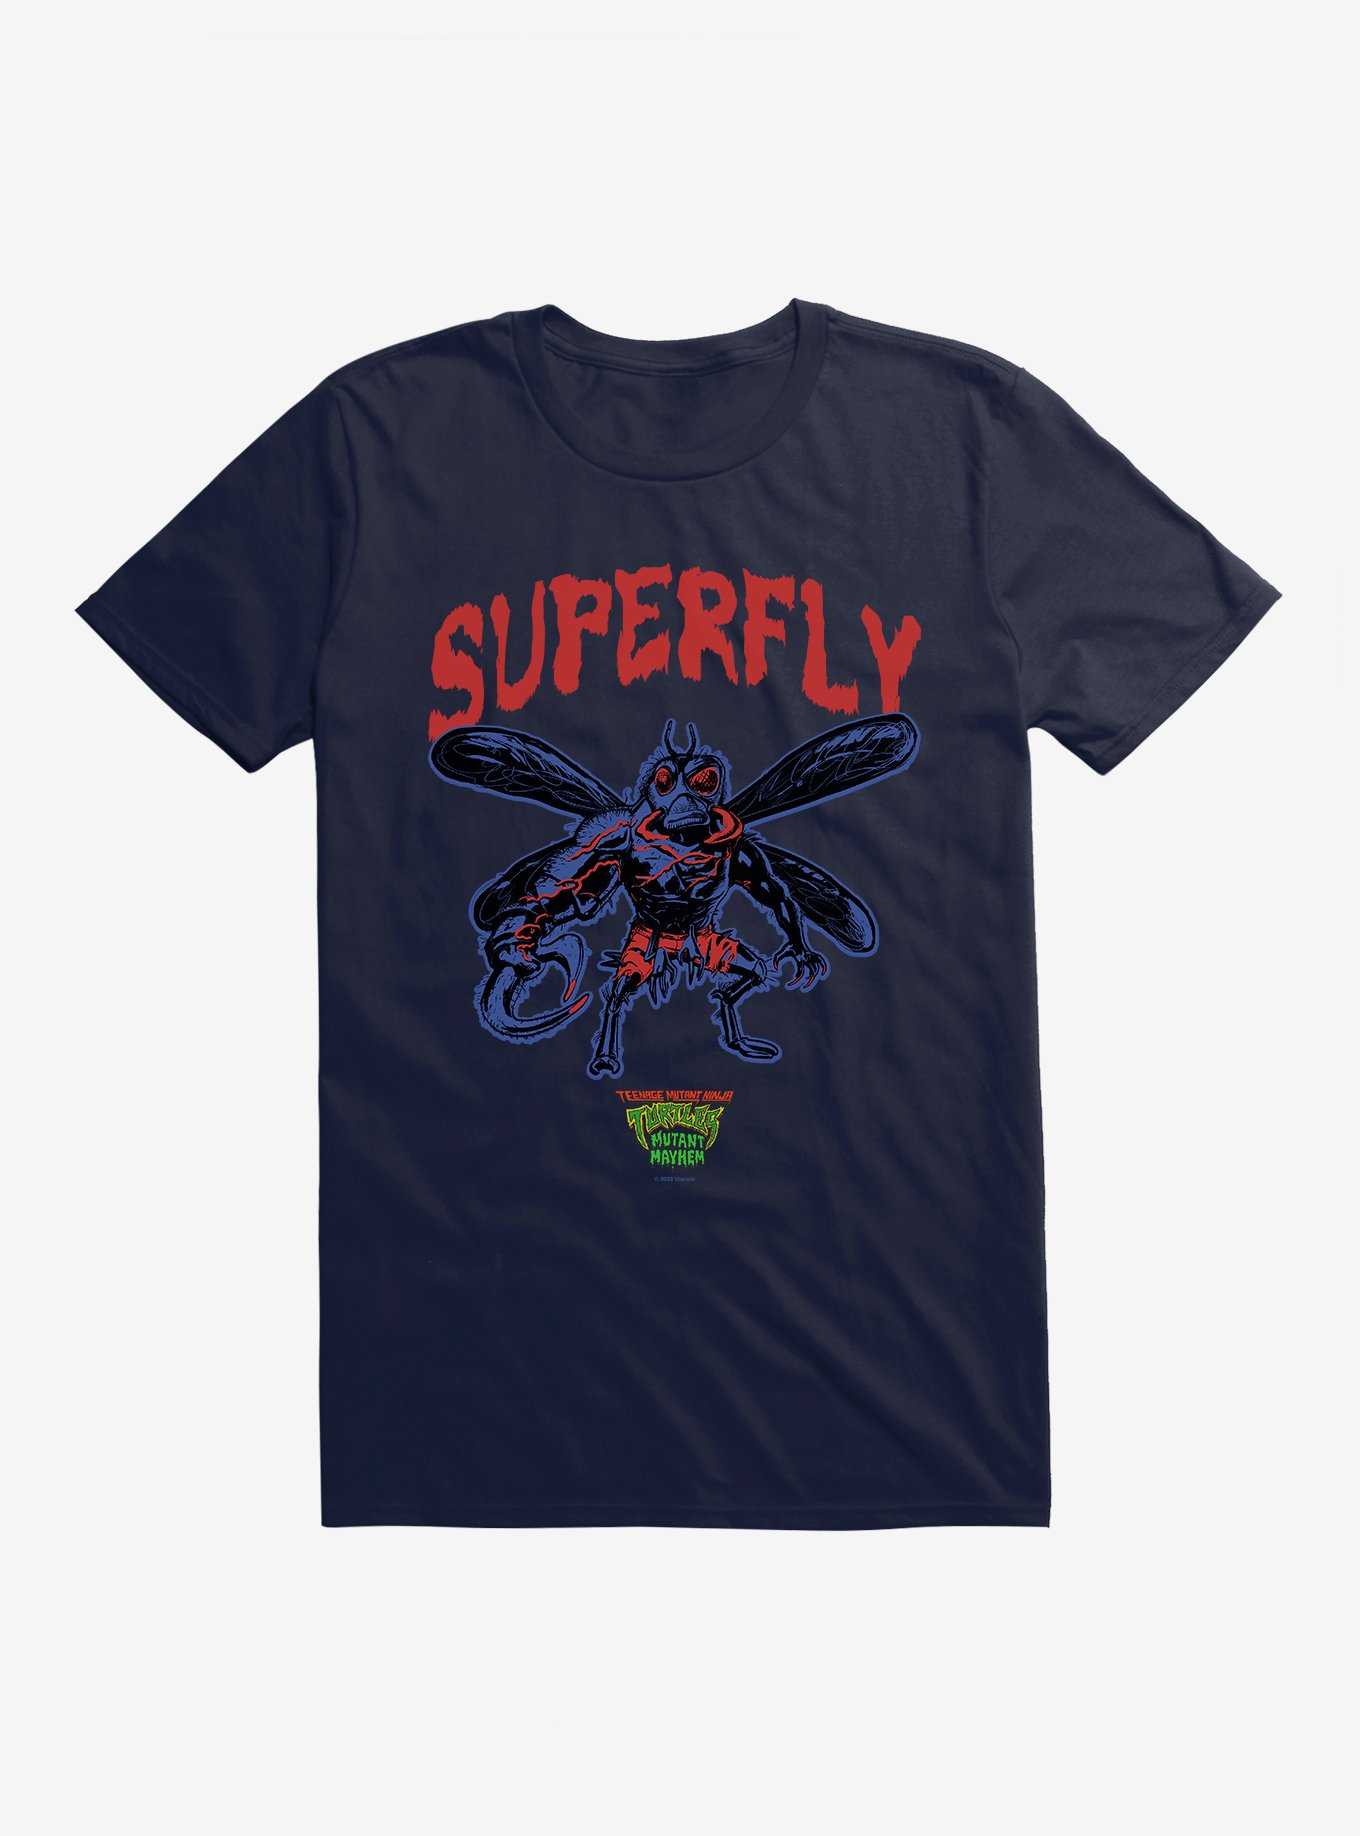 Teenage Mutant Ninja Turtles Super Fly T-Shirt, , hi-res